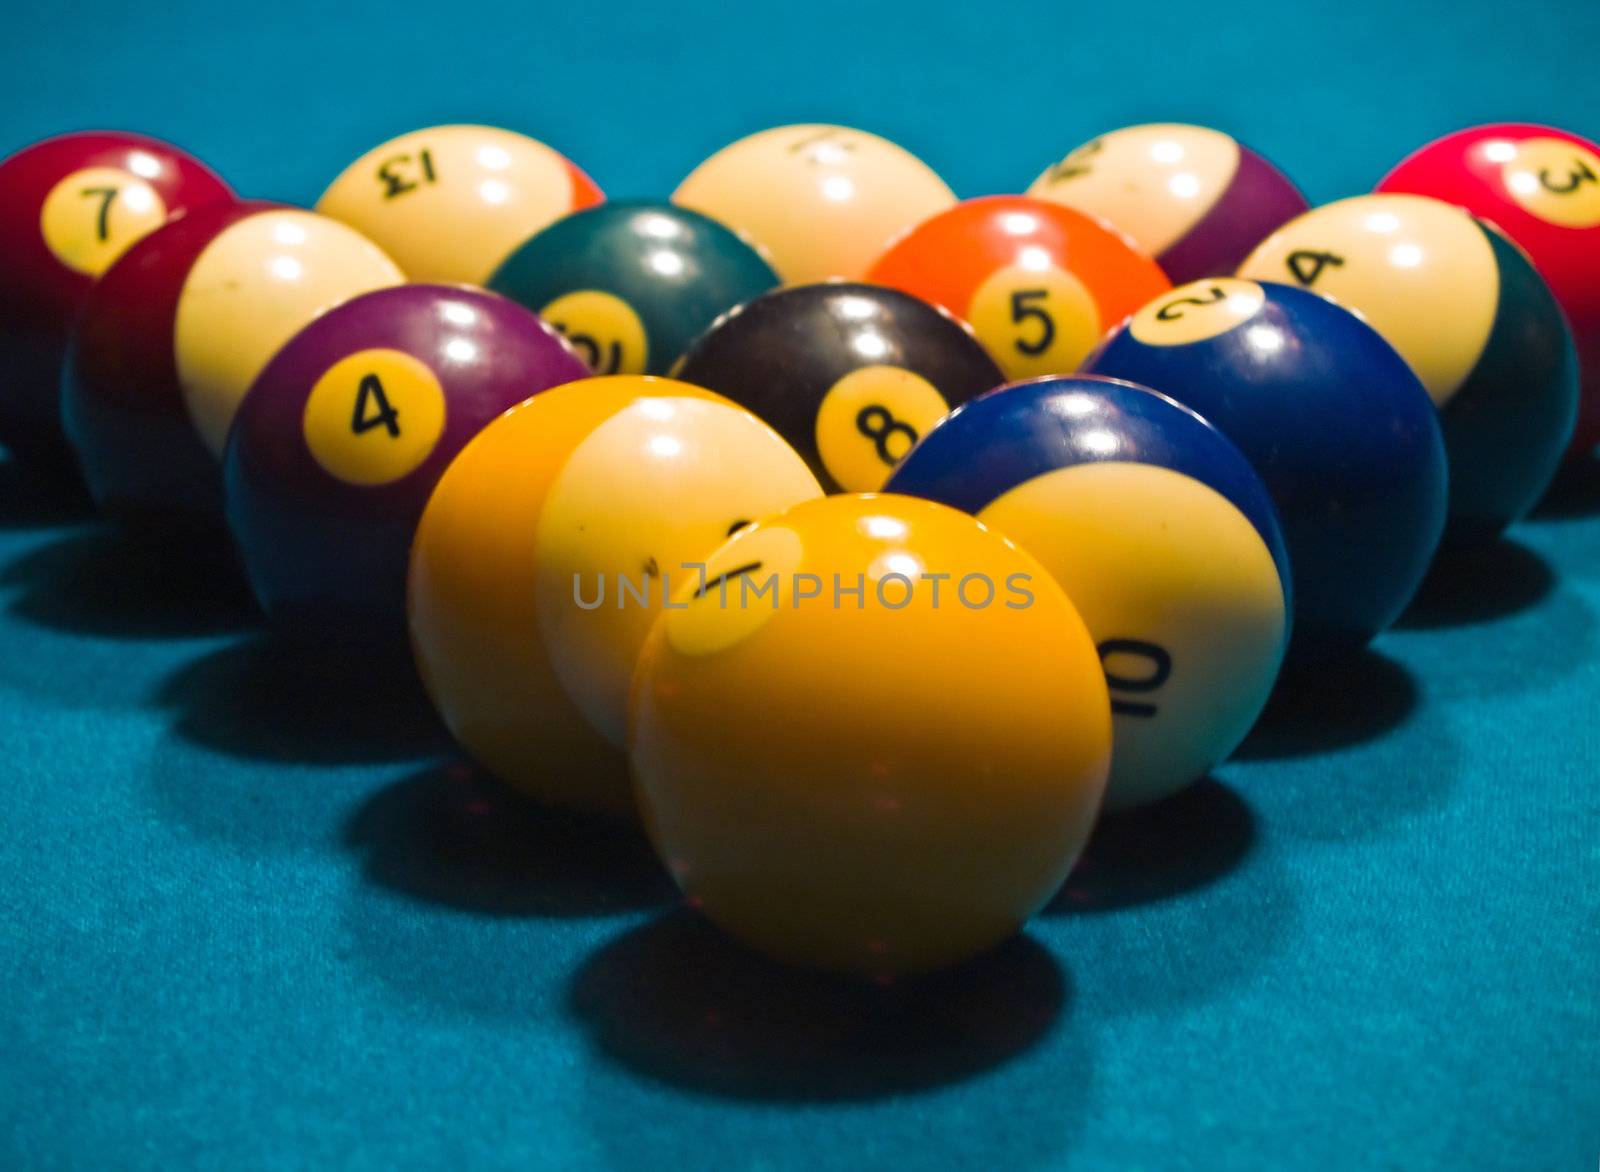 Billiards balls on a green pool table by Frankljunior